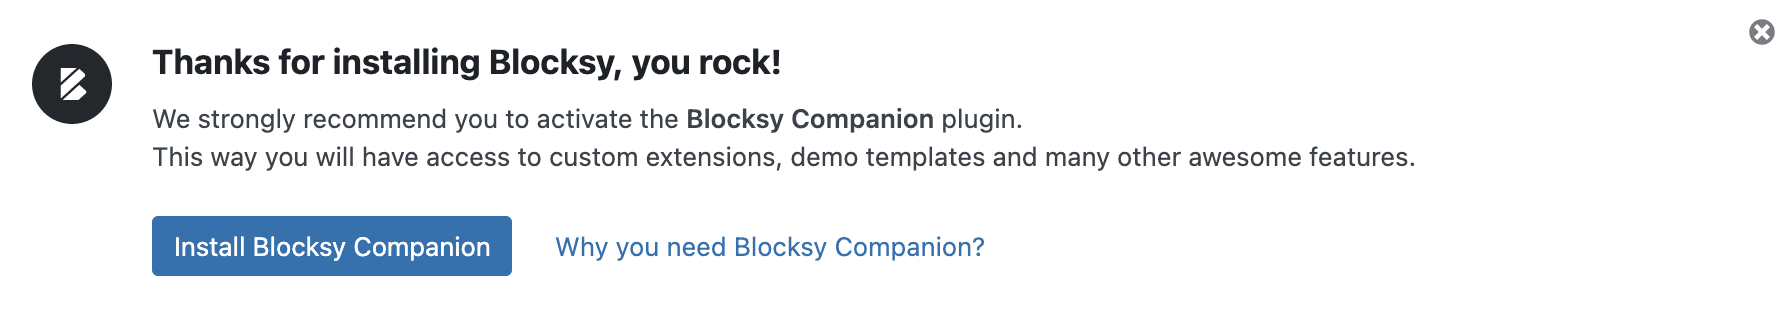 Suggestion to install the Blocksy Companion plugin.